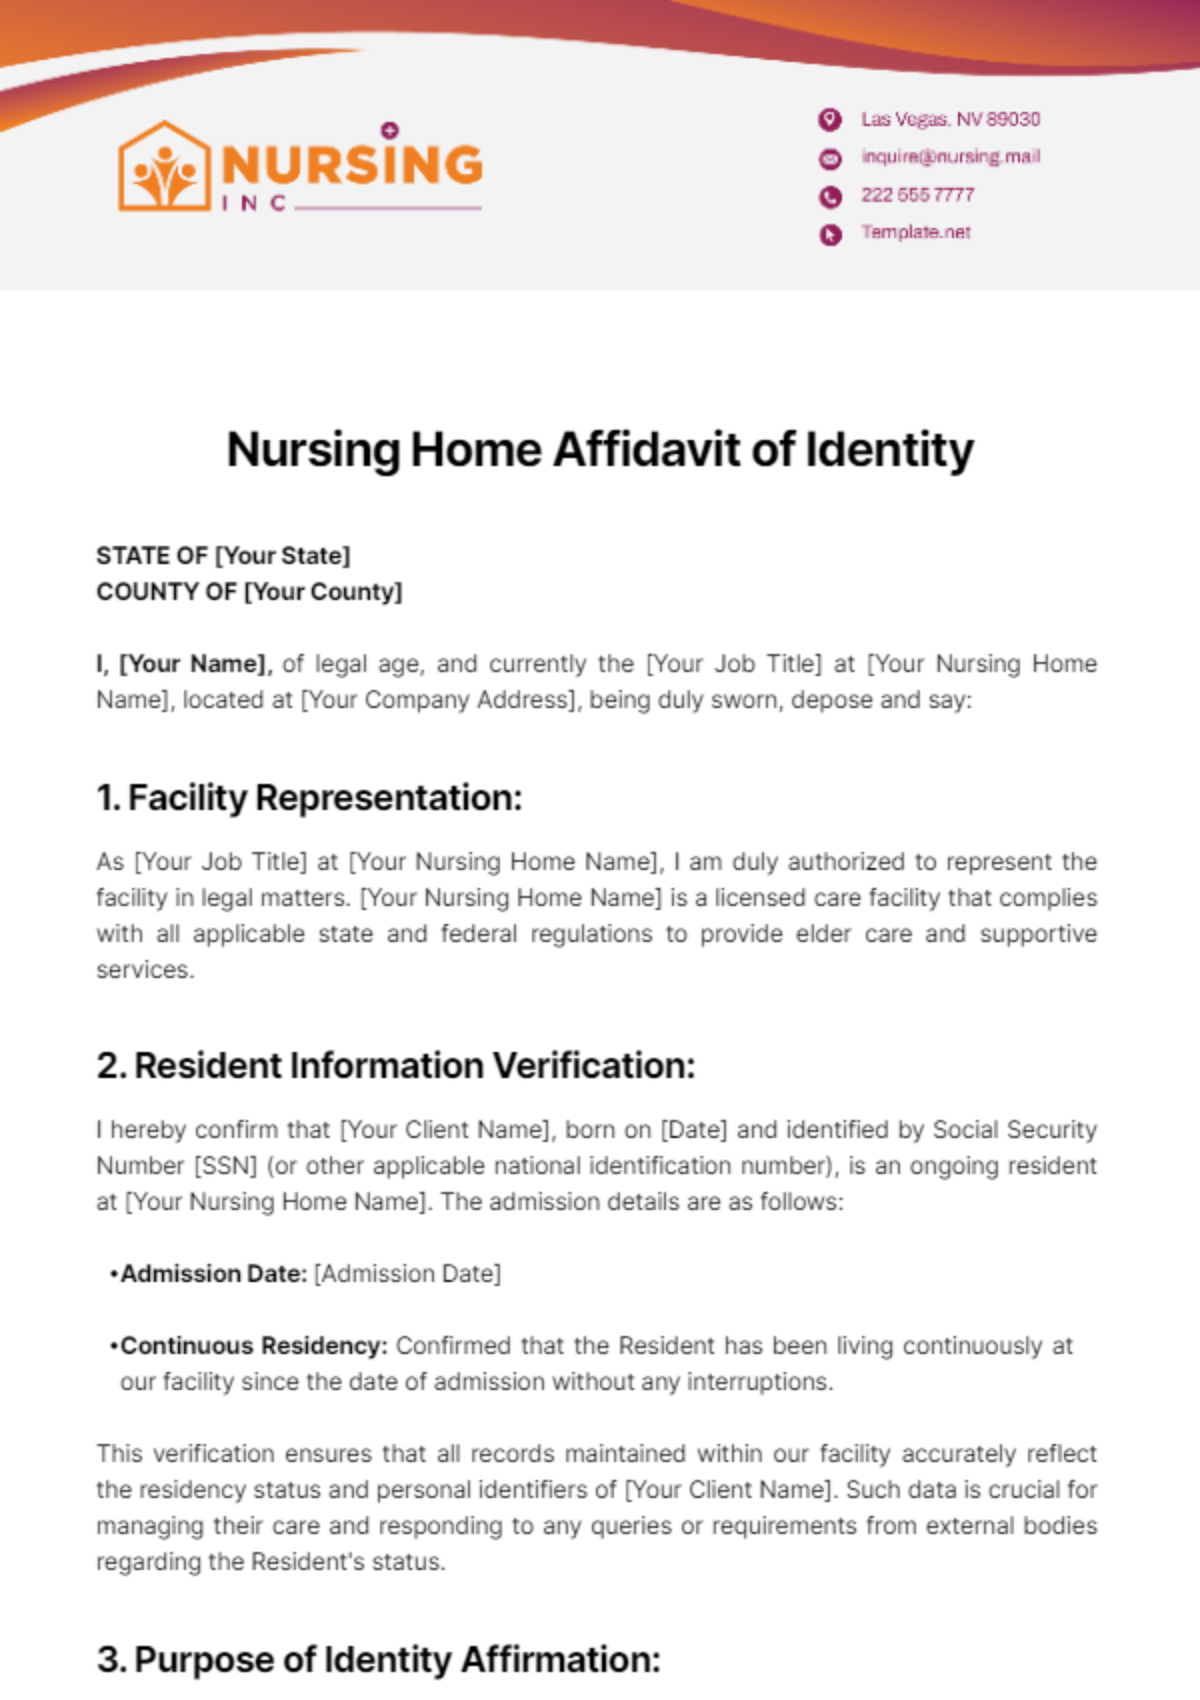 Nursing Home Affidavit of Identity Template